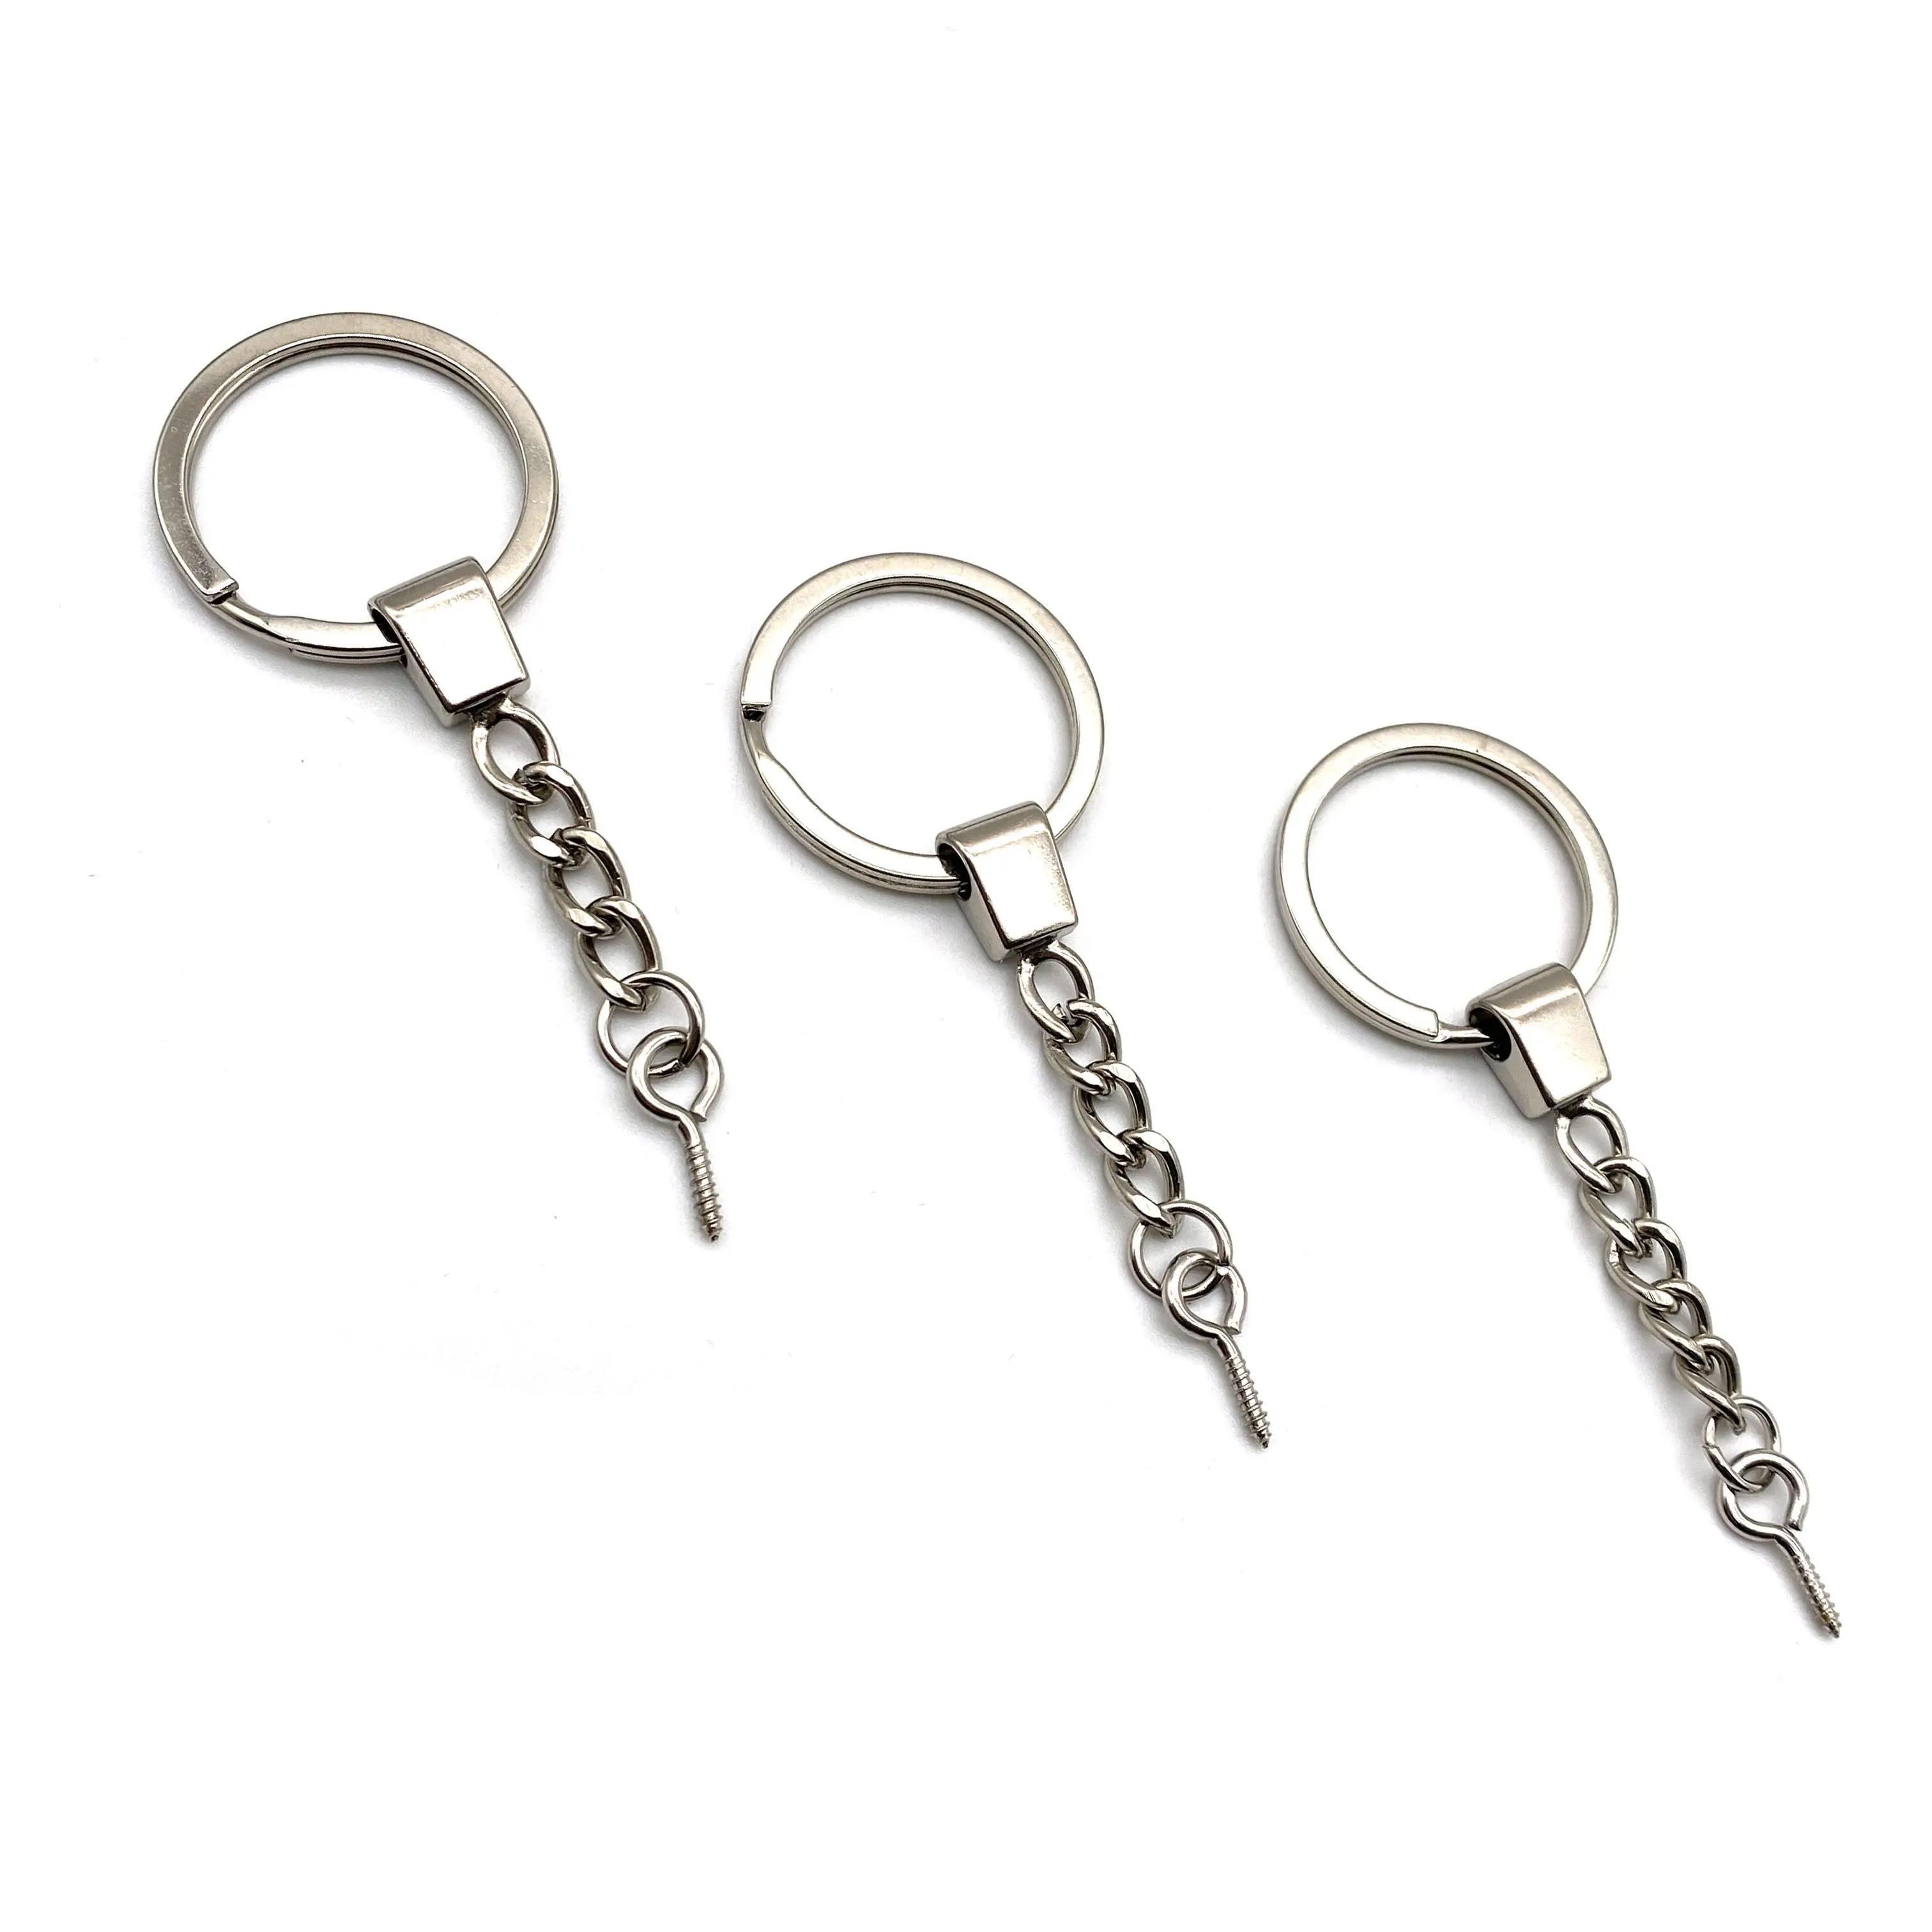 Ready to Ship Bulk Metal 30mm Key Ring Link Chain with Eye Screw Pin Split Ring Keyring Keychain